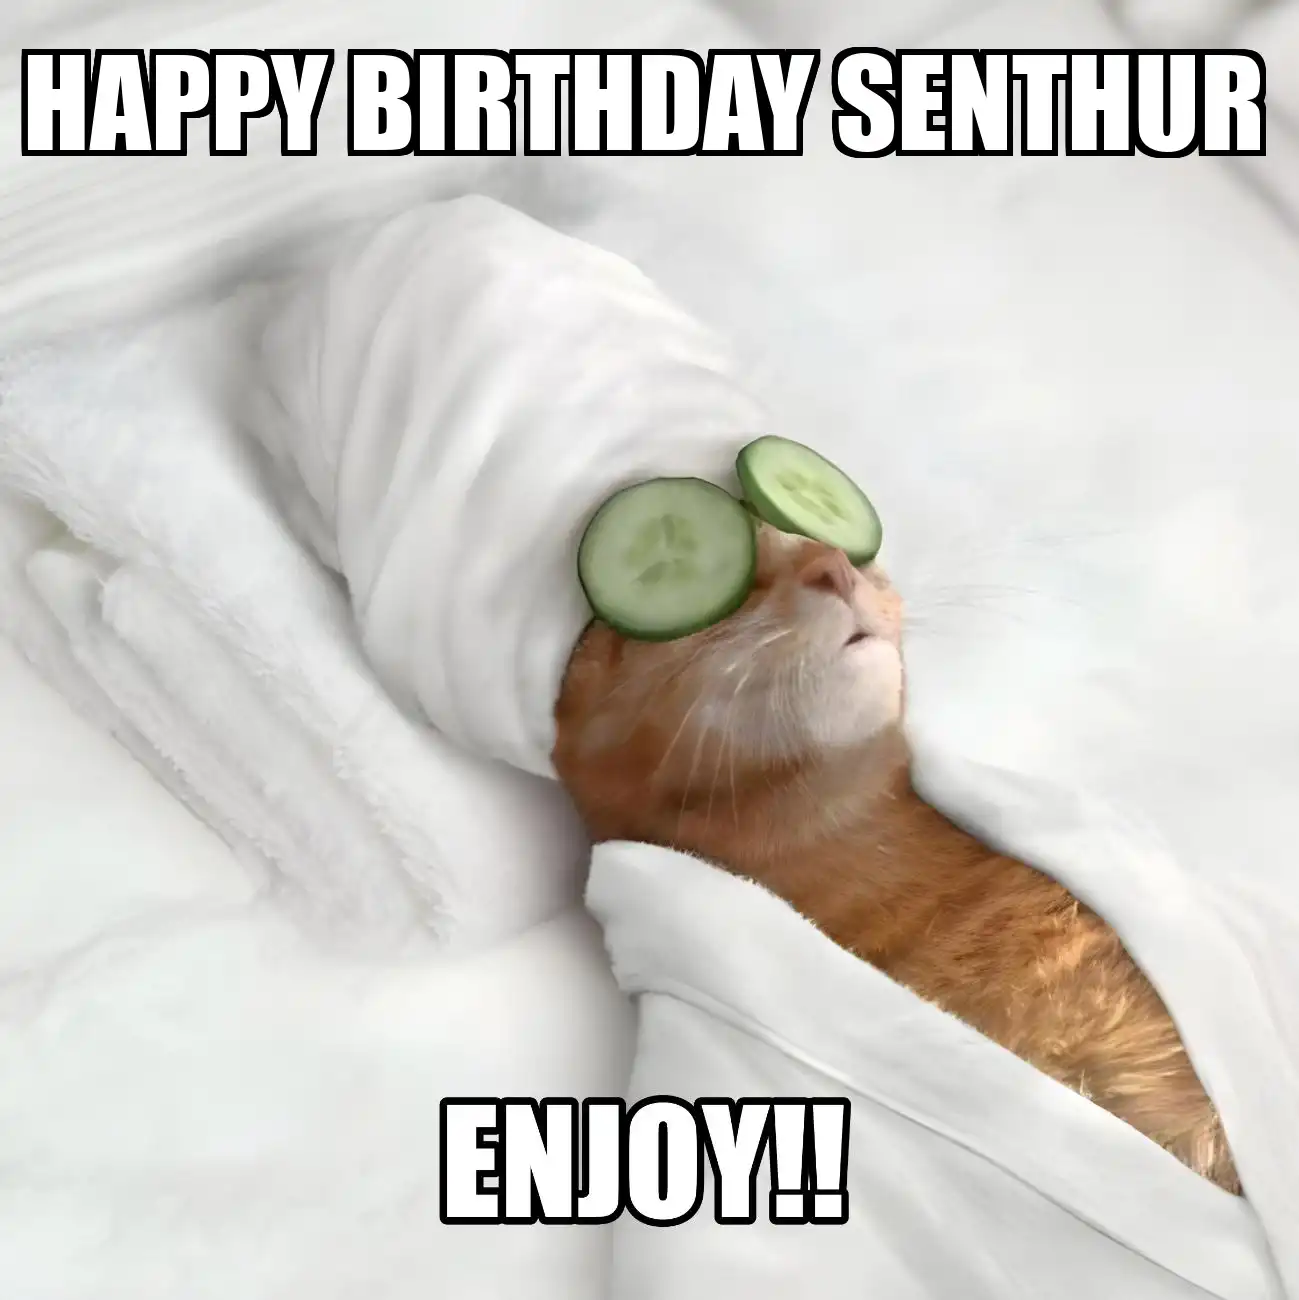 Happy Birthday Senthur Enjoy Cat Meme